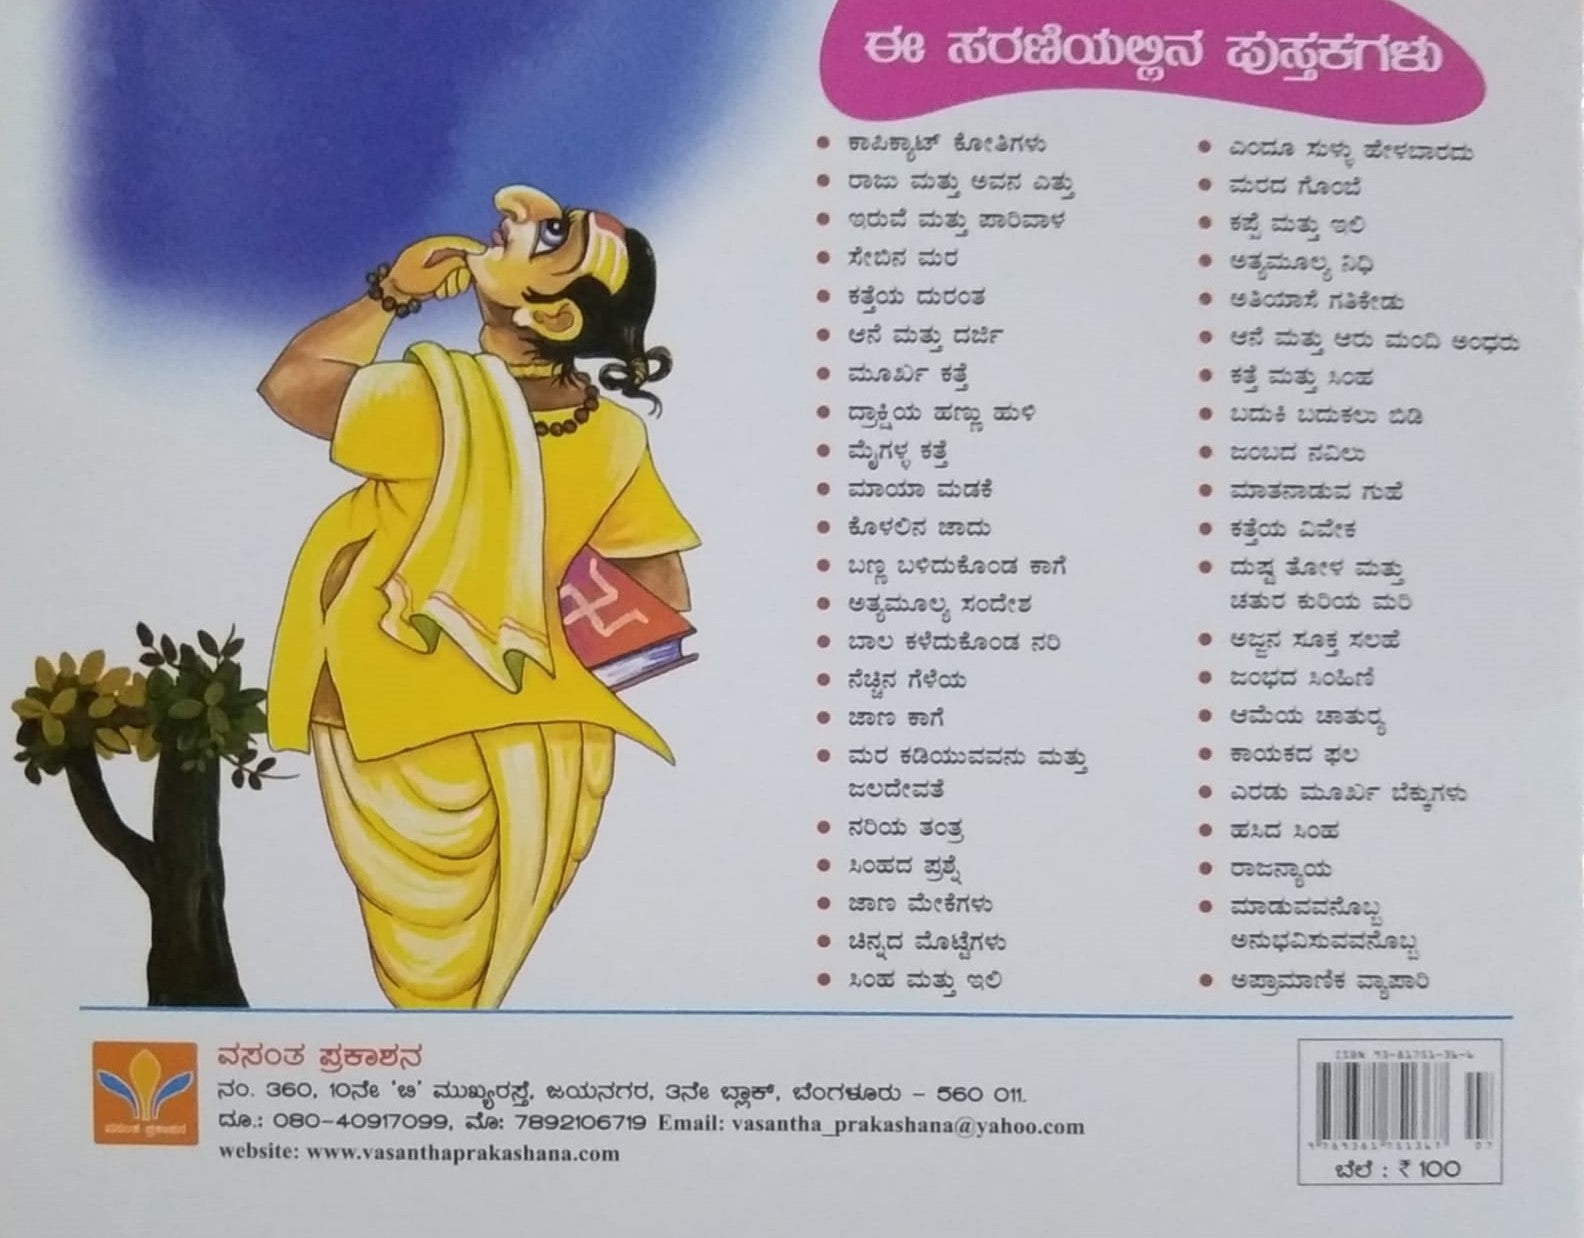 Kappe mattu Ili is a Book with Children's Stories Written by S. Pattabhirama and Published by Vasantha Prakashana